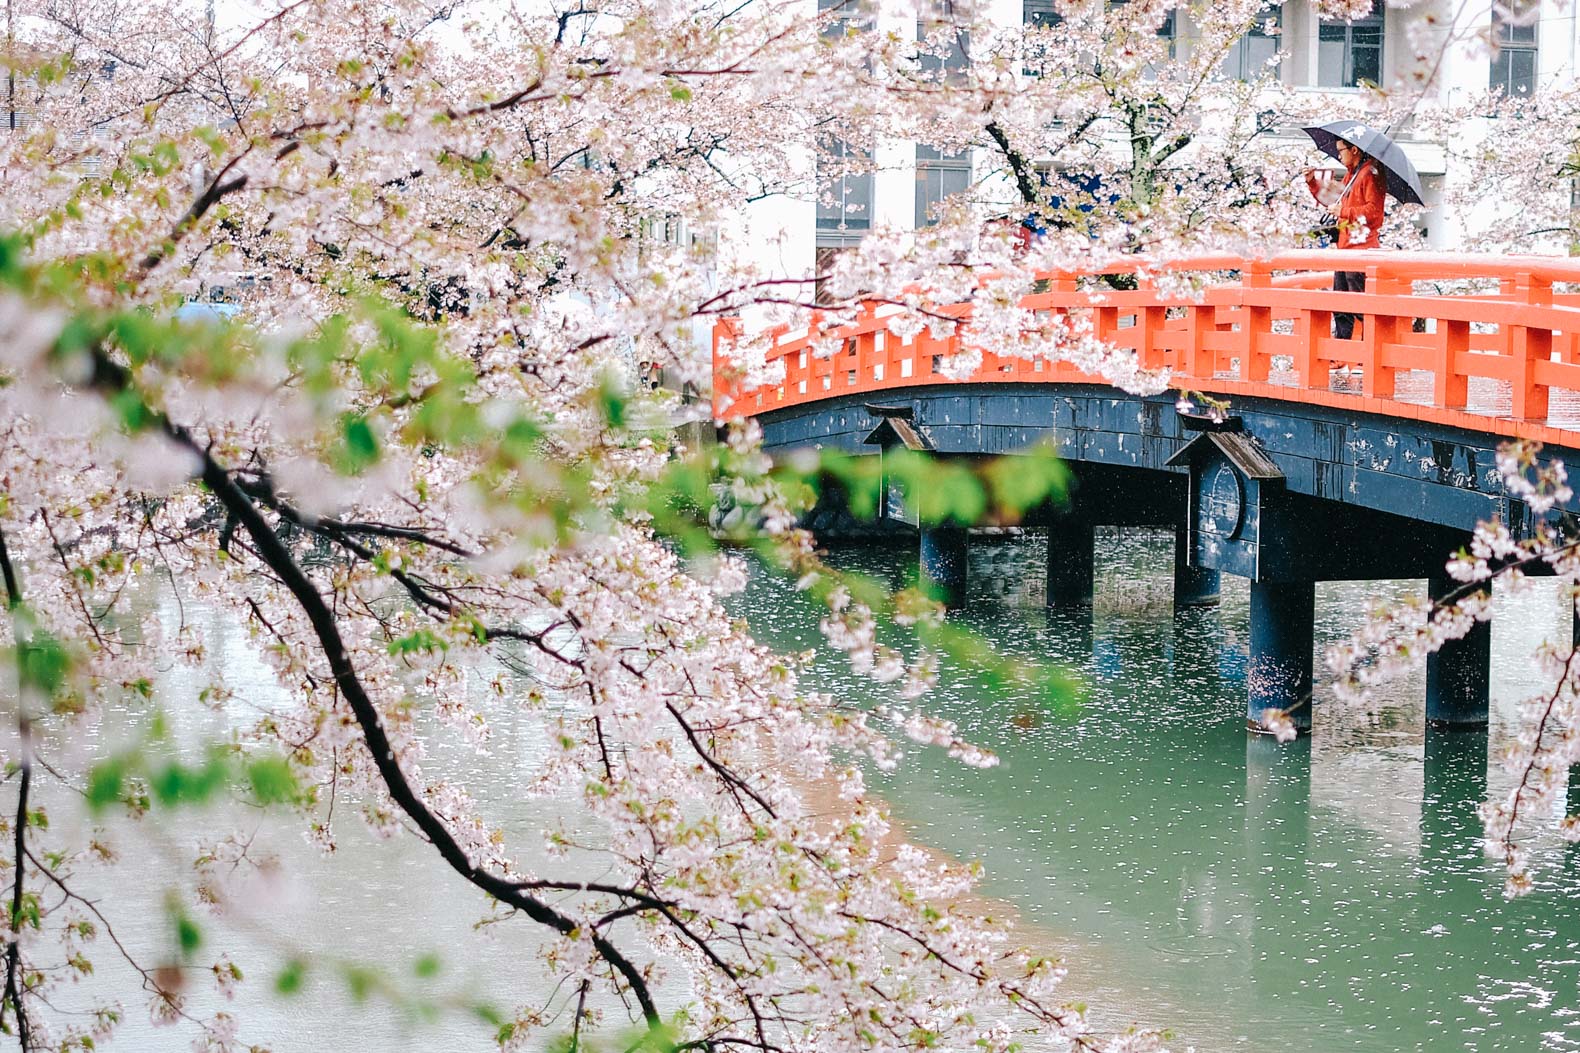 Cherry blossom trees at the Hirosaki Castle Park.